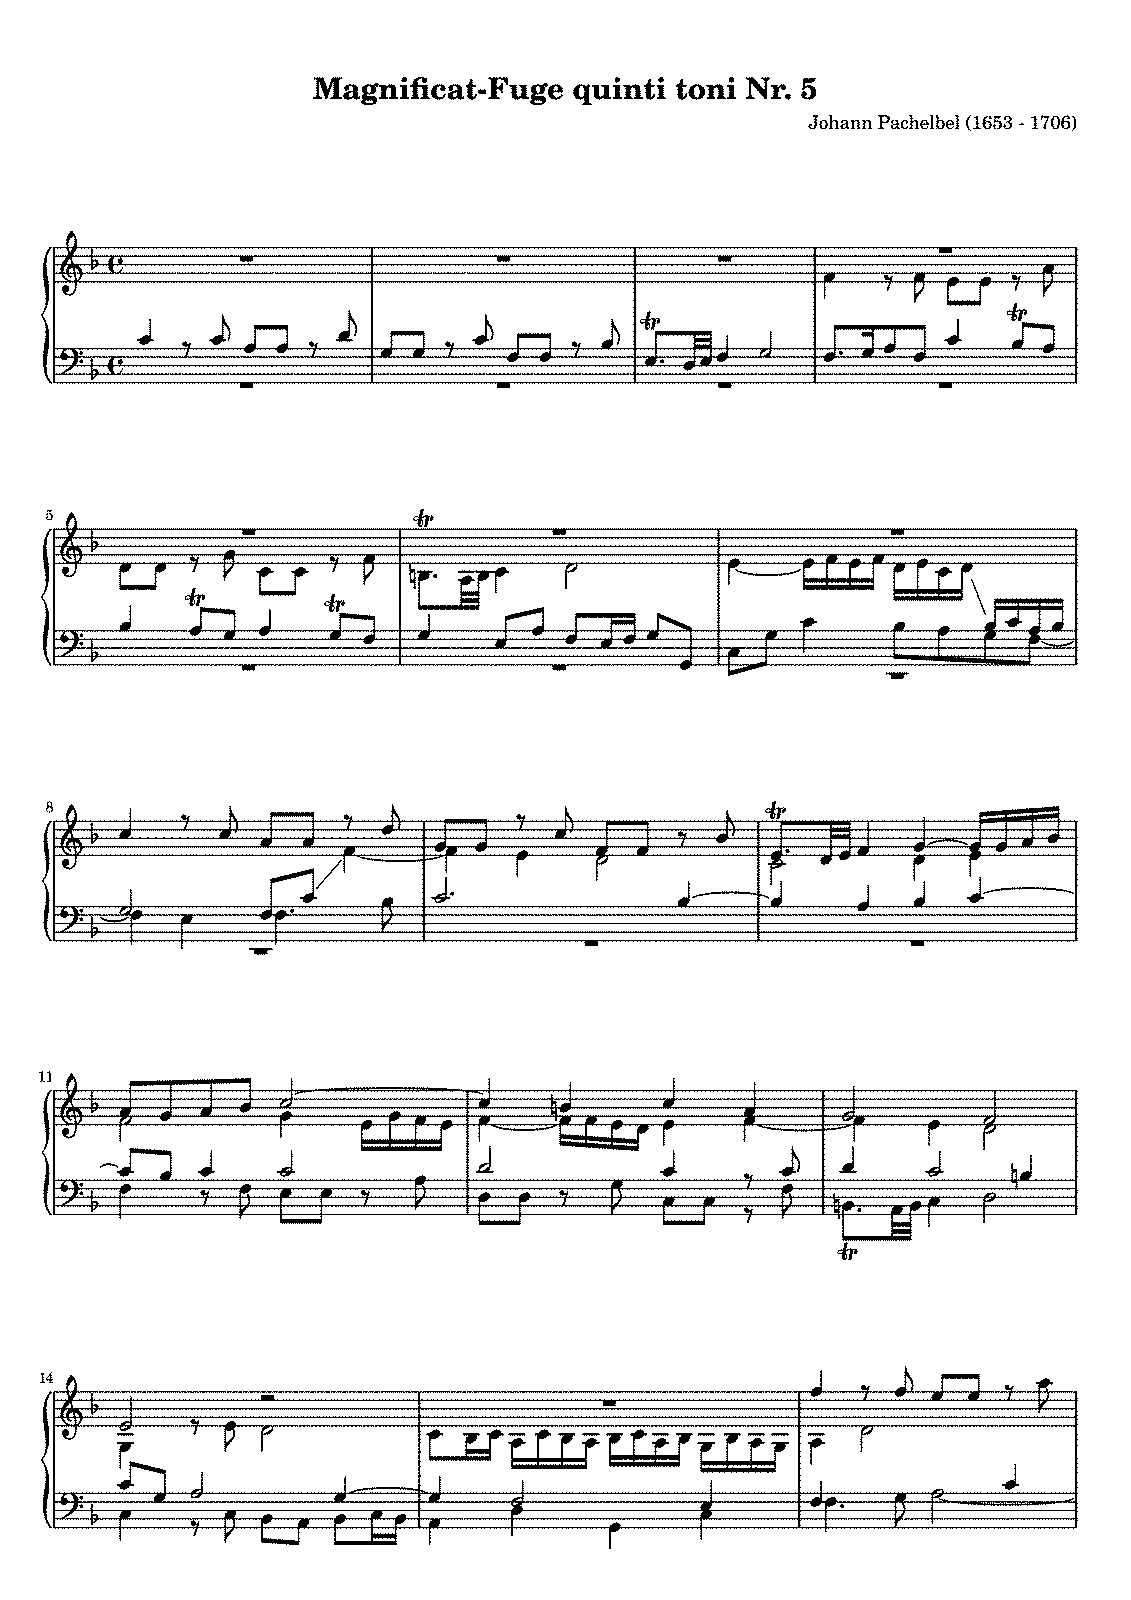 Magnificat Fugue, P.318 (Pachelbel, Johann) - IMSLP